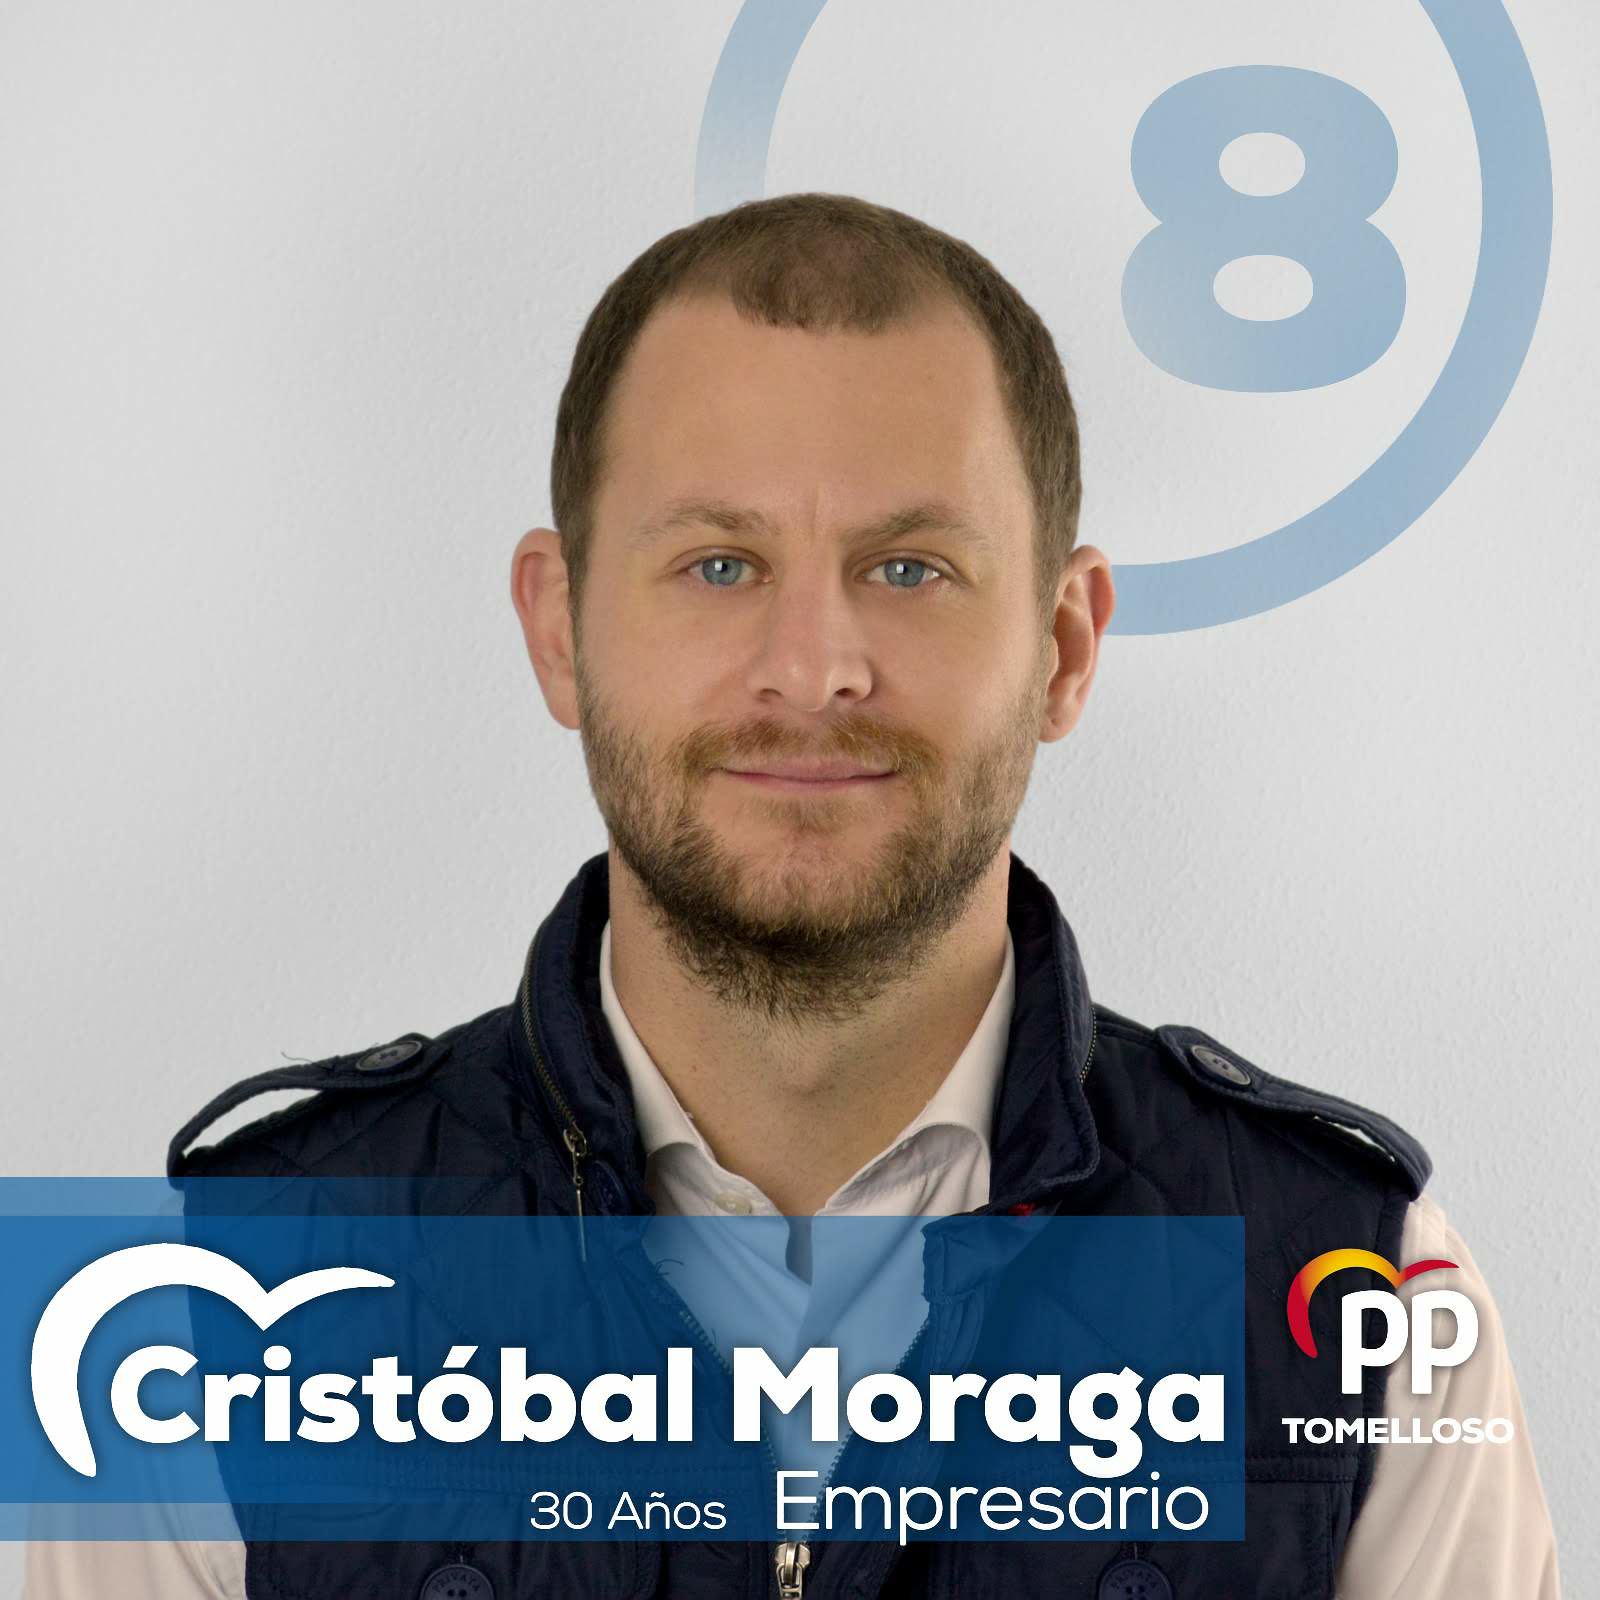 cristobal-moraga-pp-tomelloso